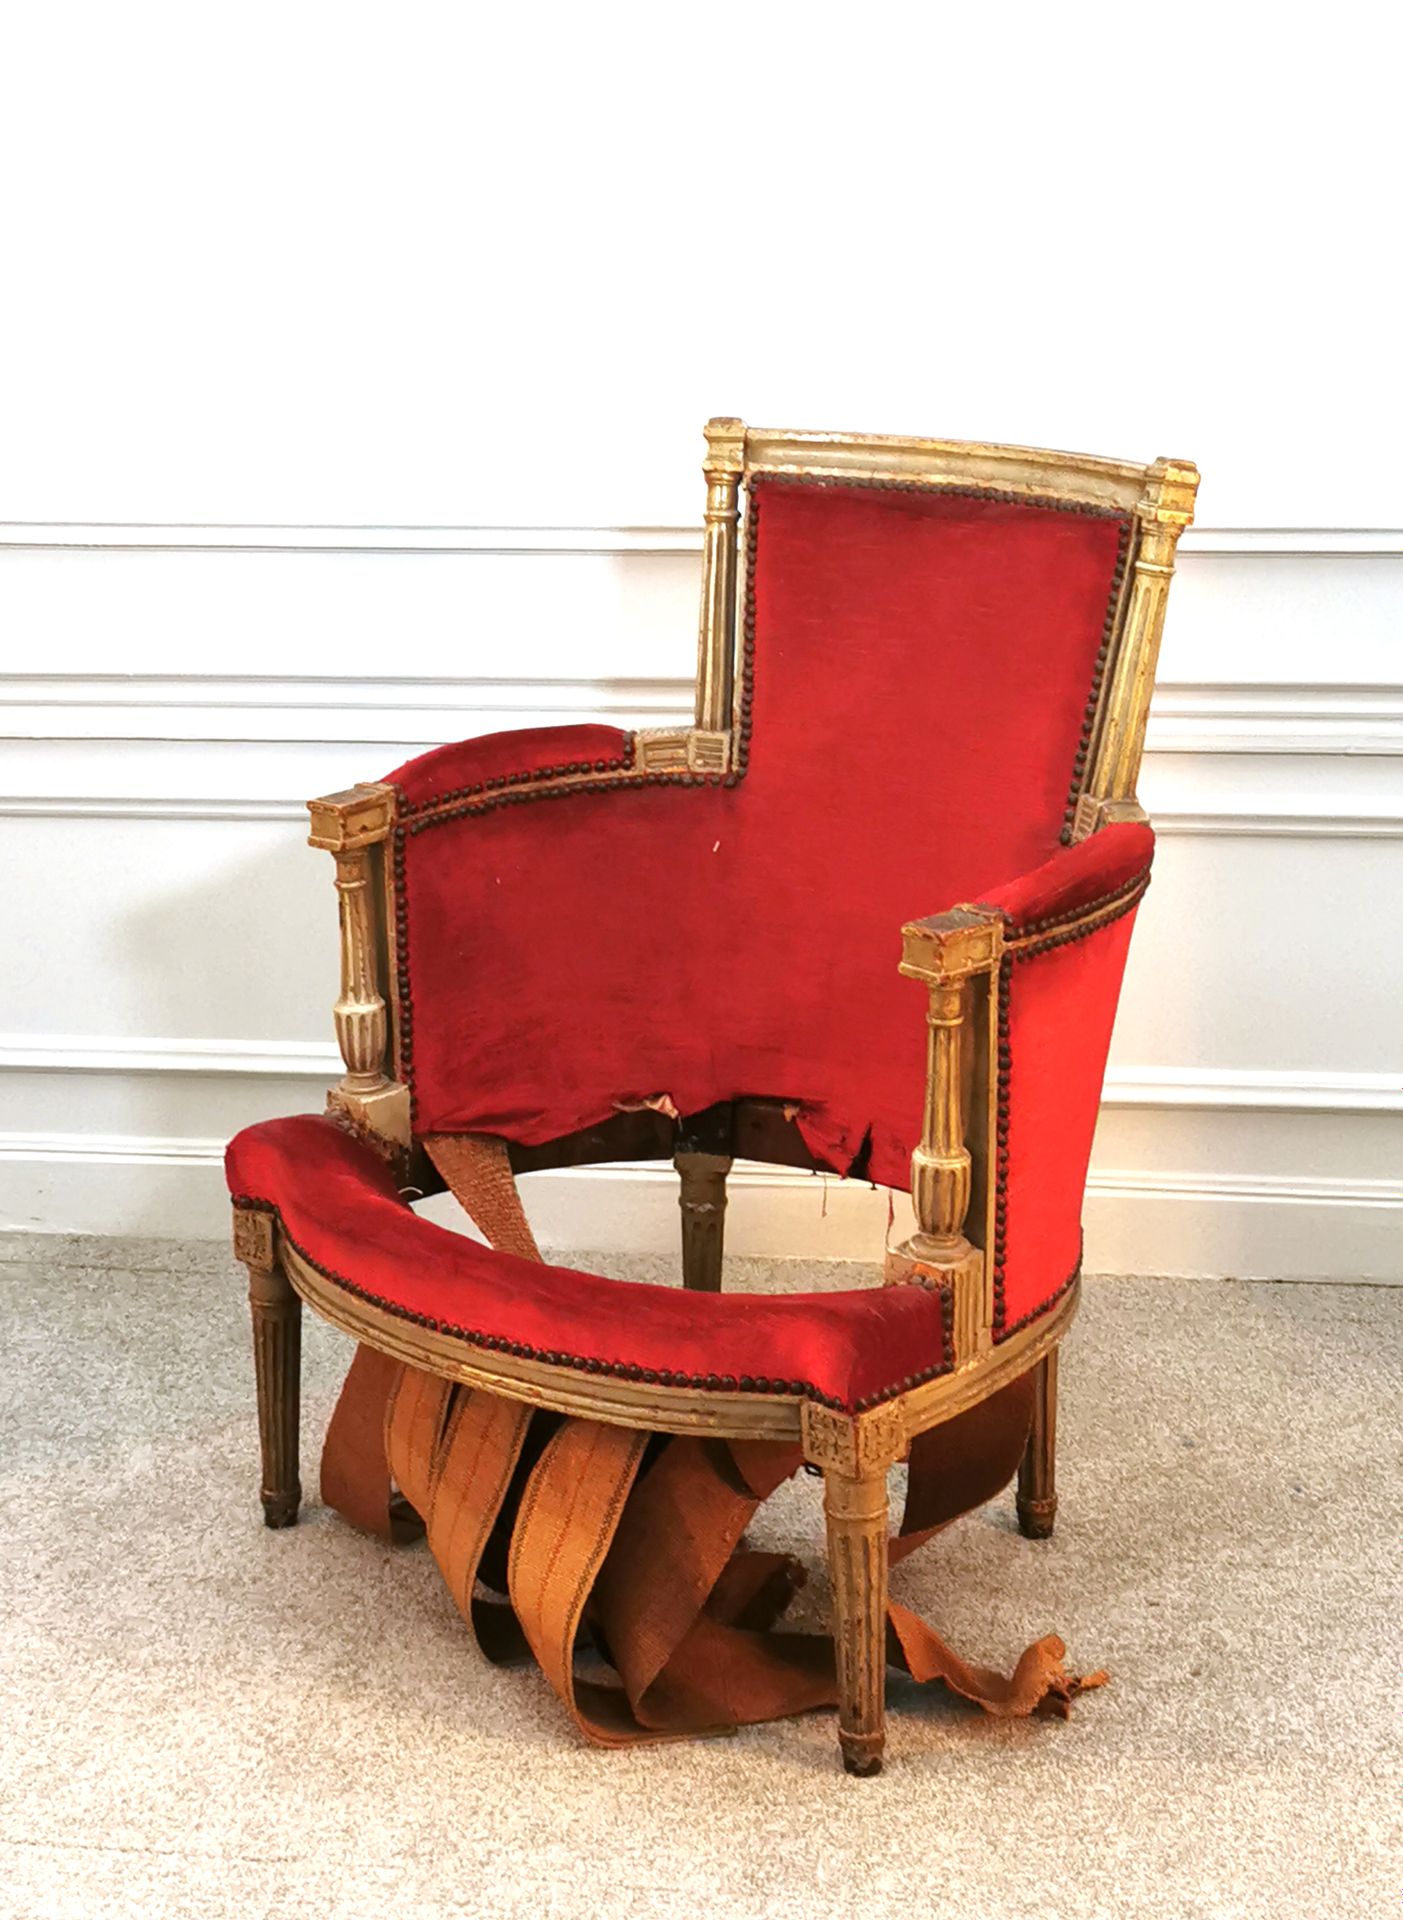 Null 有独立柱子的贝格尔

路易十六时期

H.84 x W. 64 x D. 62 cm

损坏的座椅



拍卖会结束后，将在巴黎16e区预约领取拍品